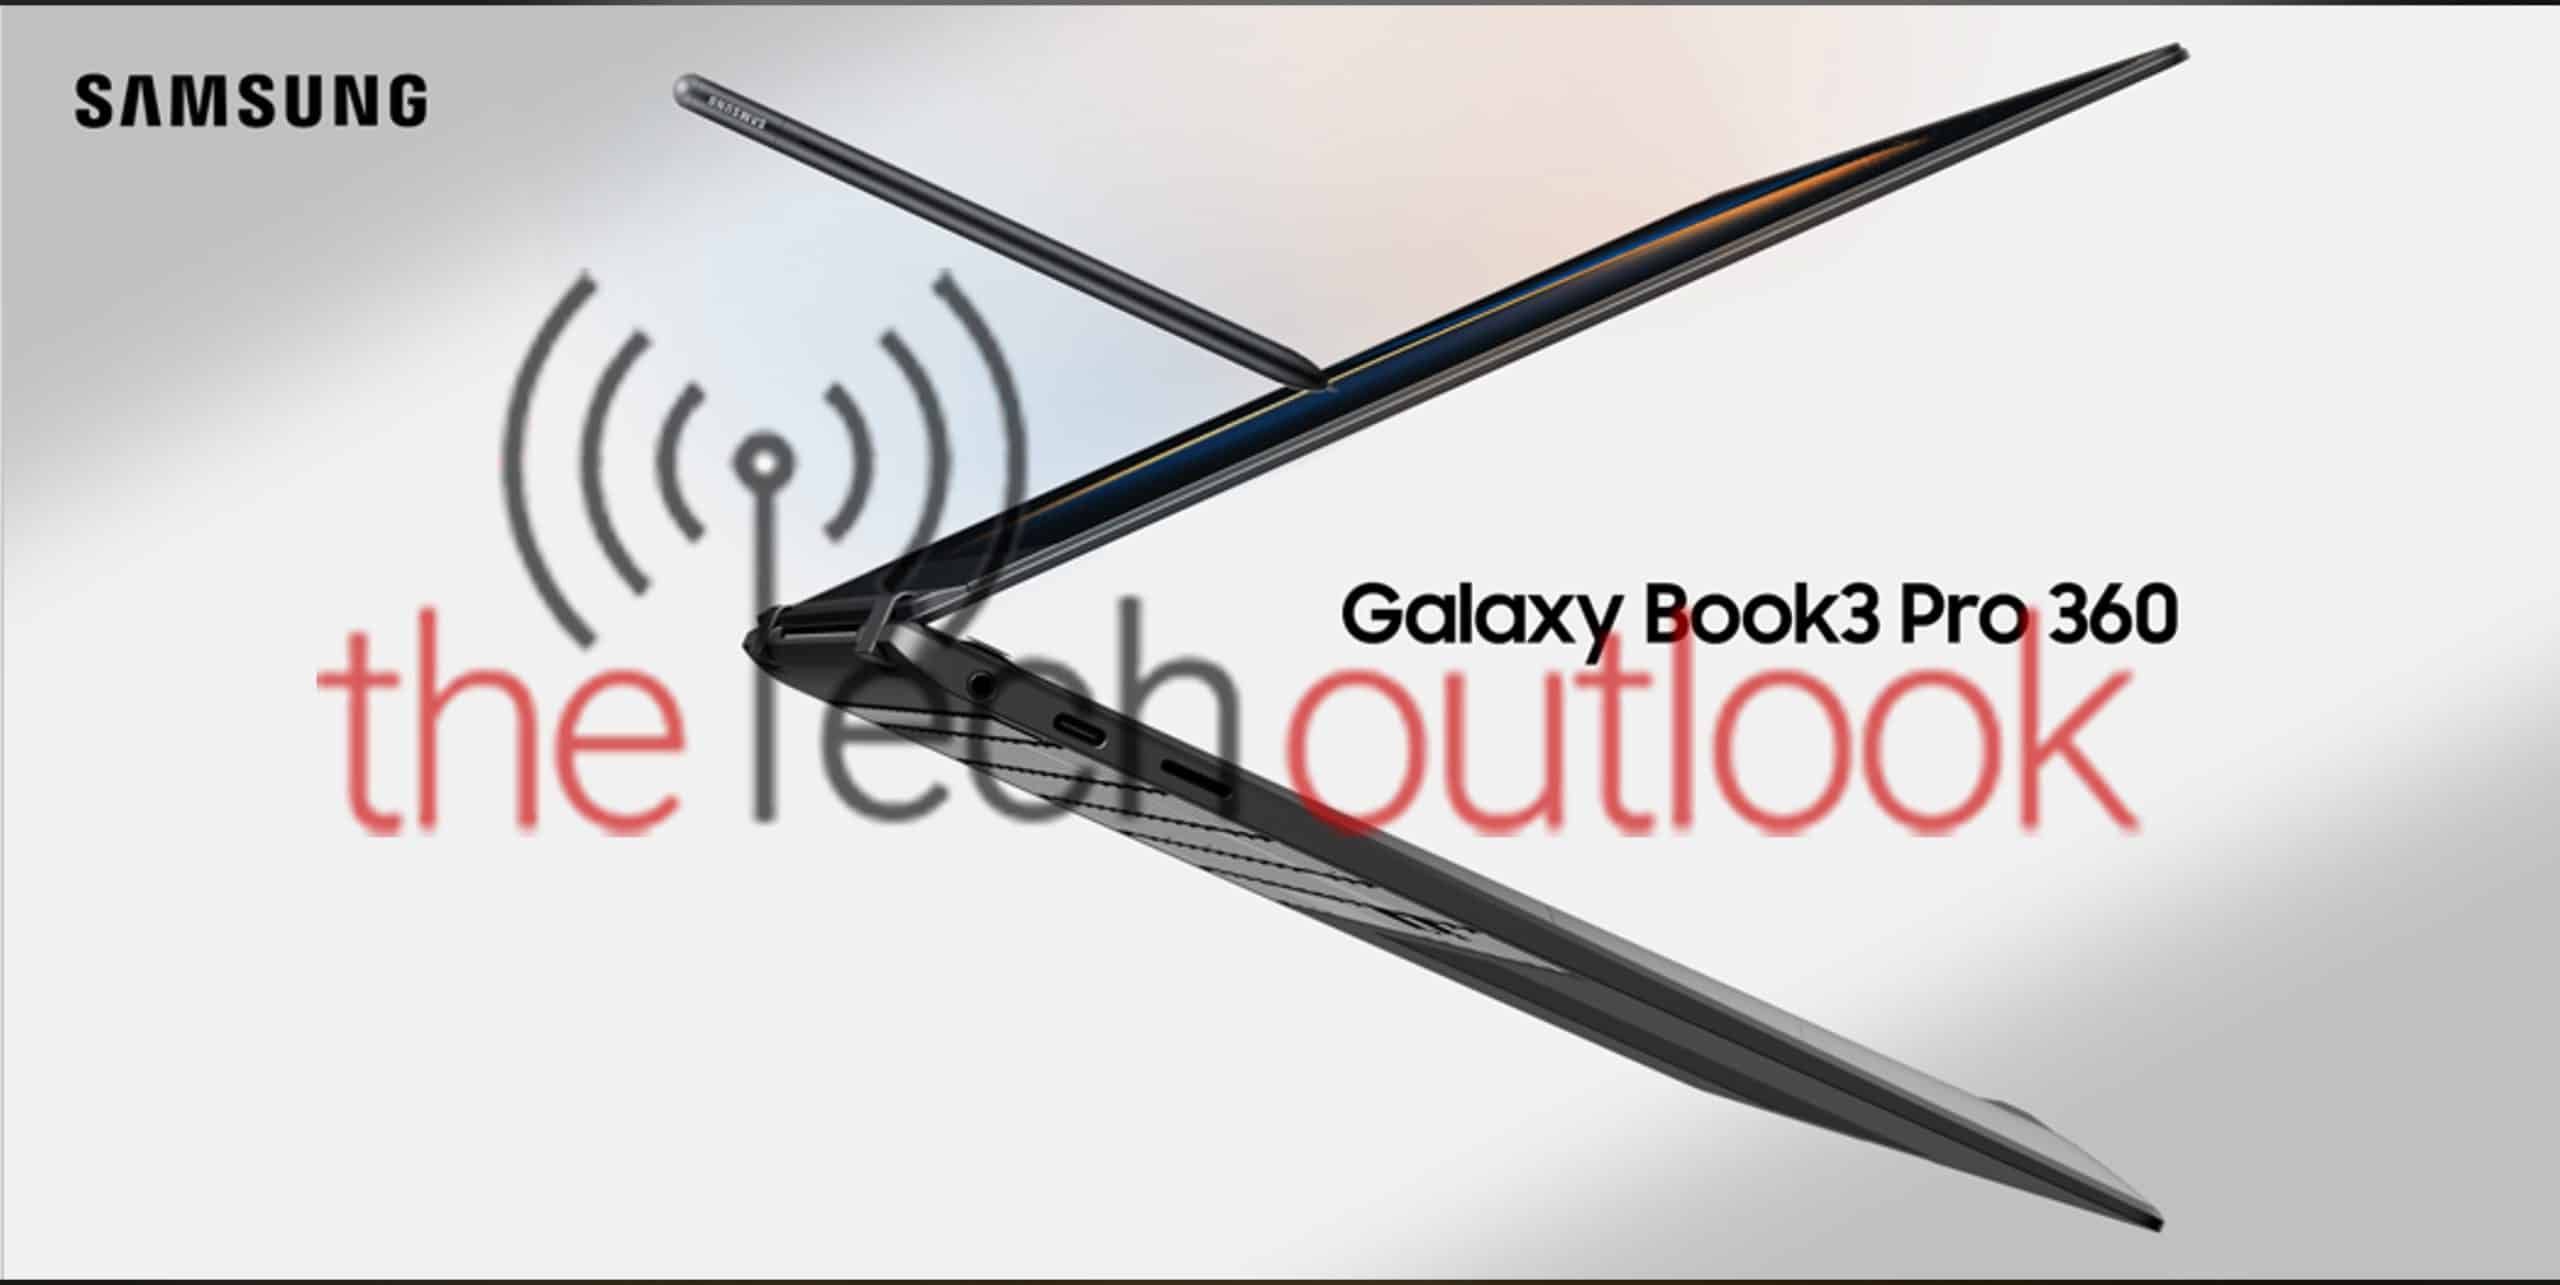 Samsung Galaxy Book 3 Pro 360 with stylus